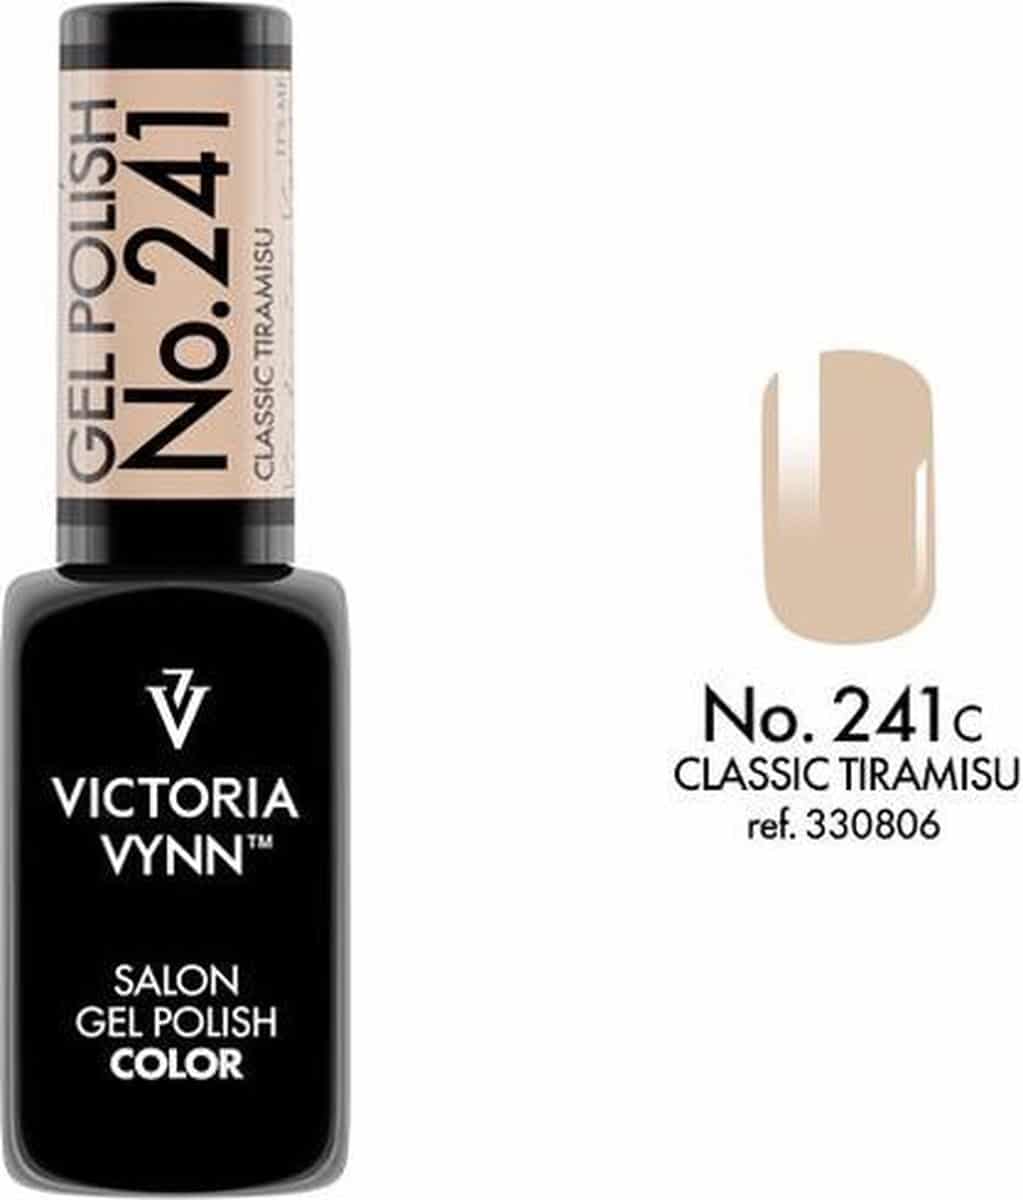 Victoria Vynn™ Gellak - Gel Nagellak - Salon Gel Polish Color - Classic Tiramisu 241 - 8 ml